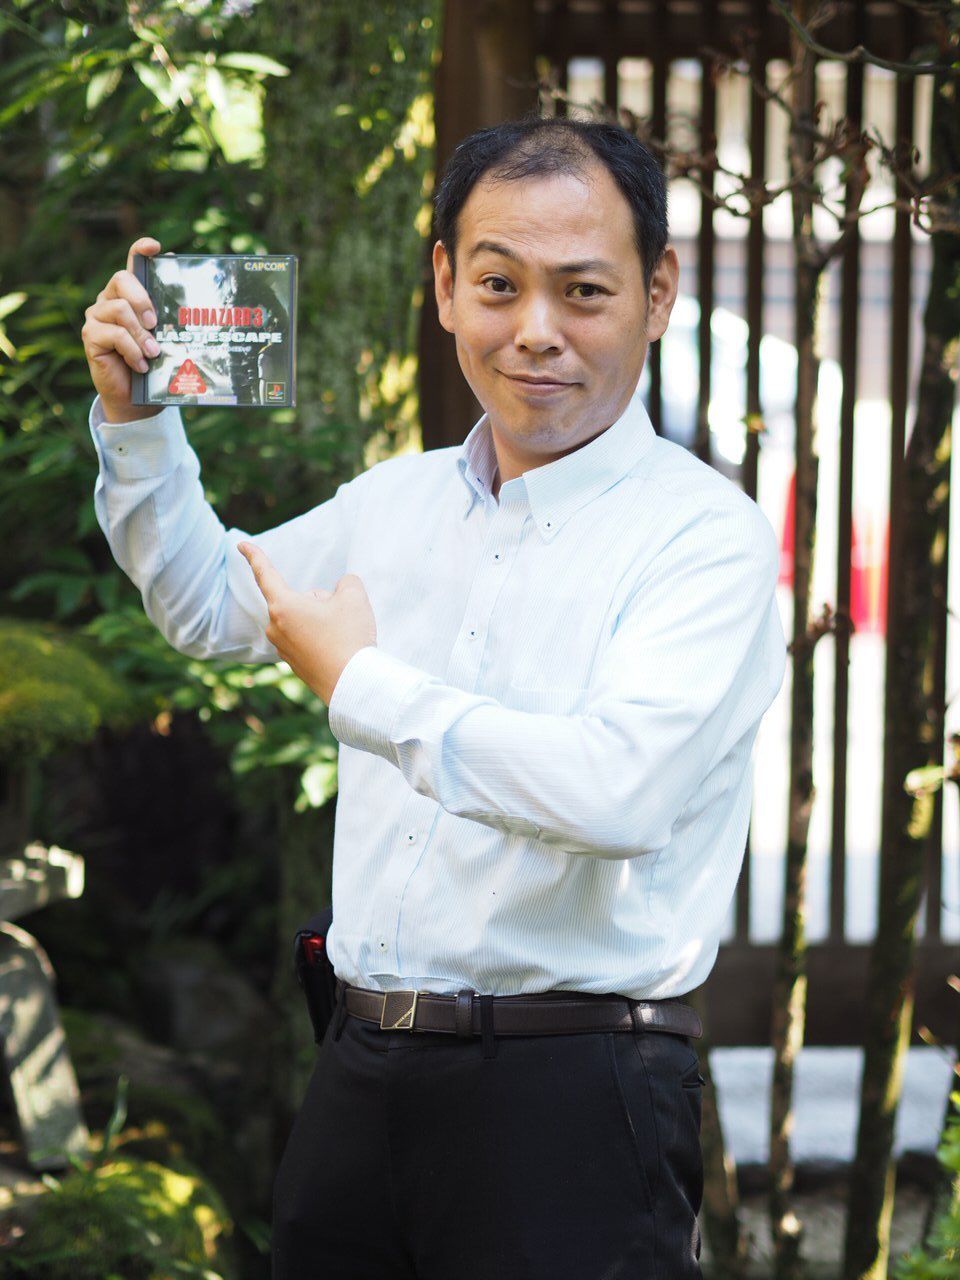 Kazuhiro Aoyama holds up a copy of Resident Evil 3